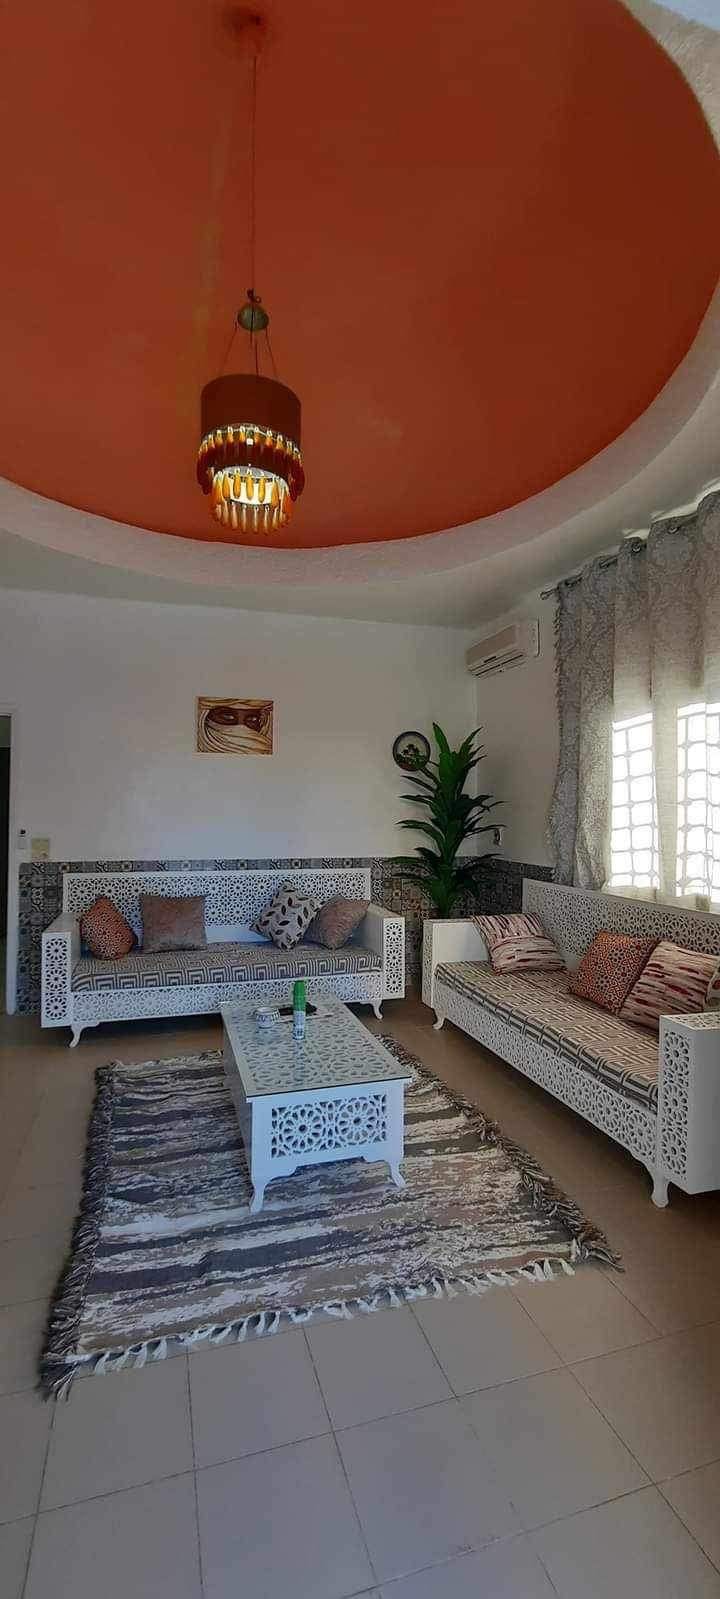 Djerba - Midoun Zone Hoteliere Location vacances Maisons Villa avec piscine zone touristique